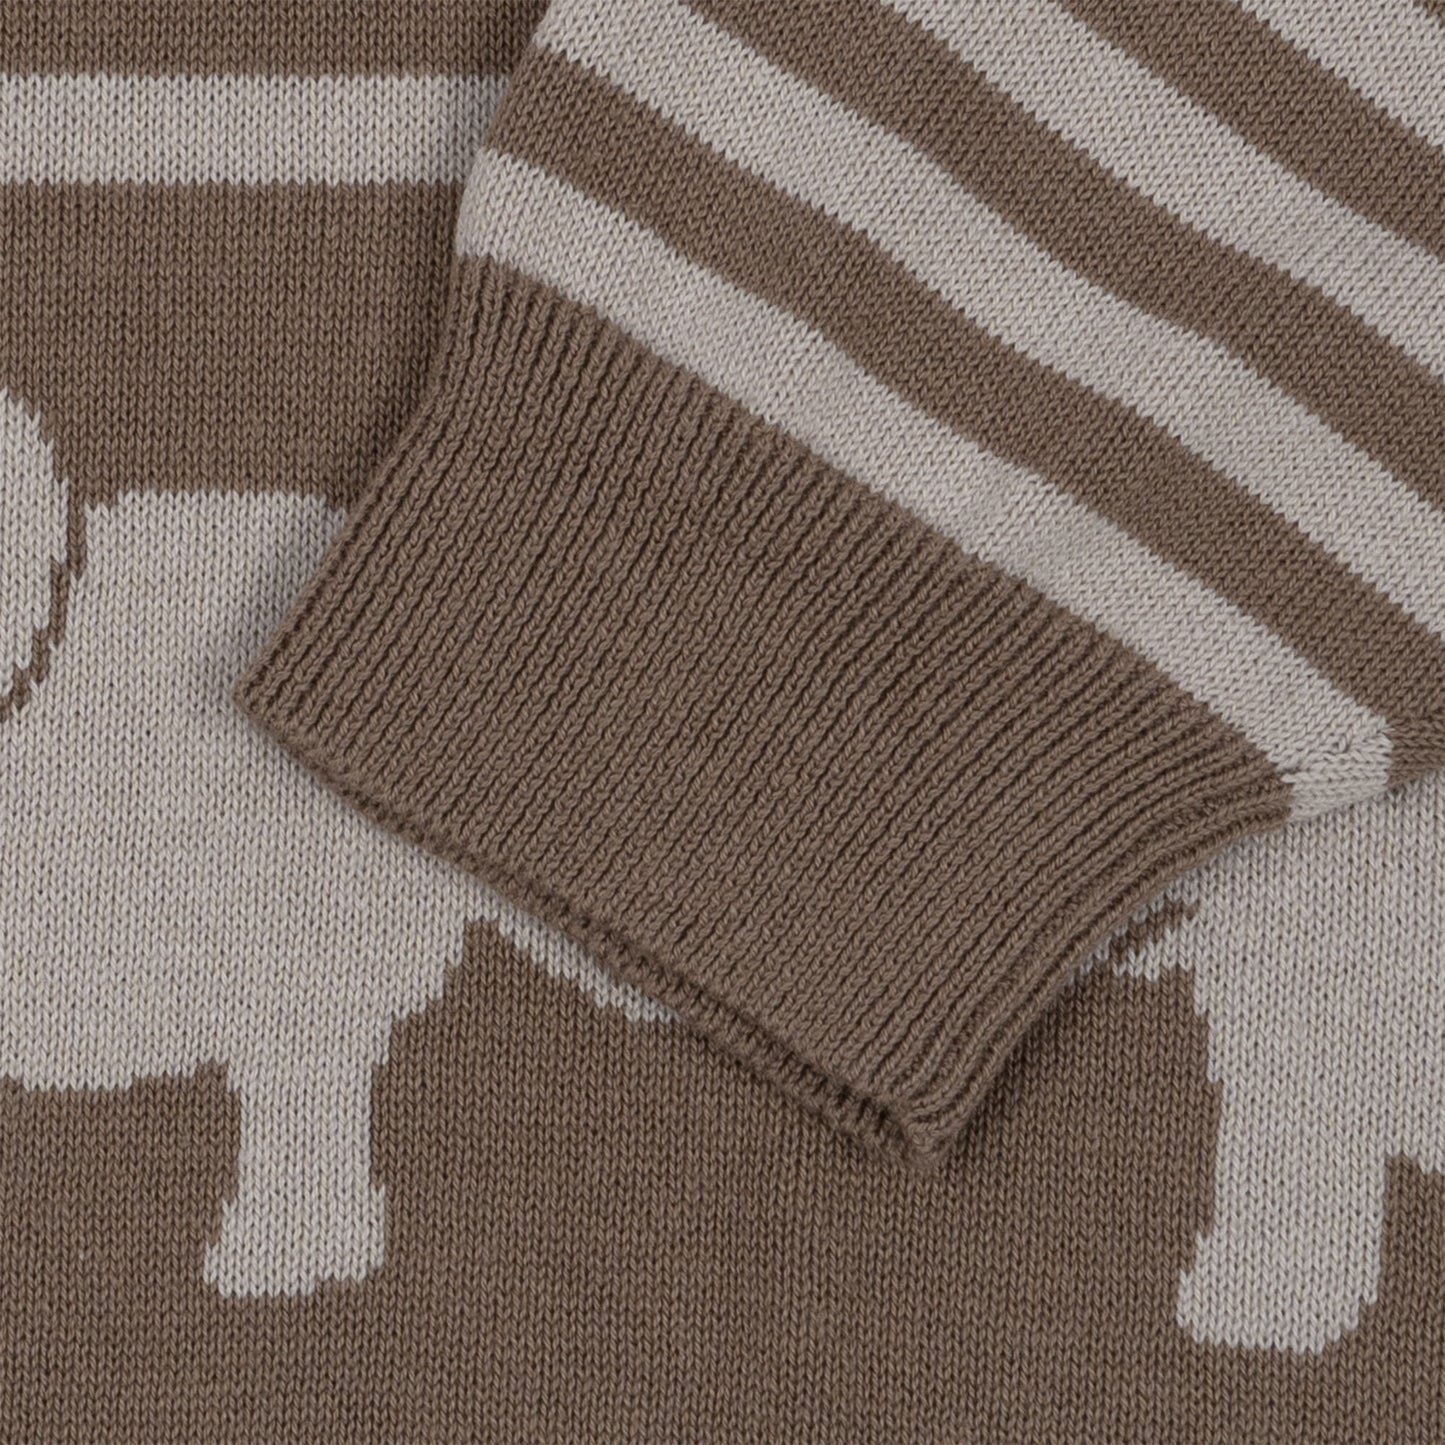 Loui knit blouse - Brown melange